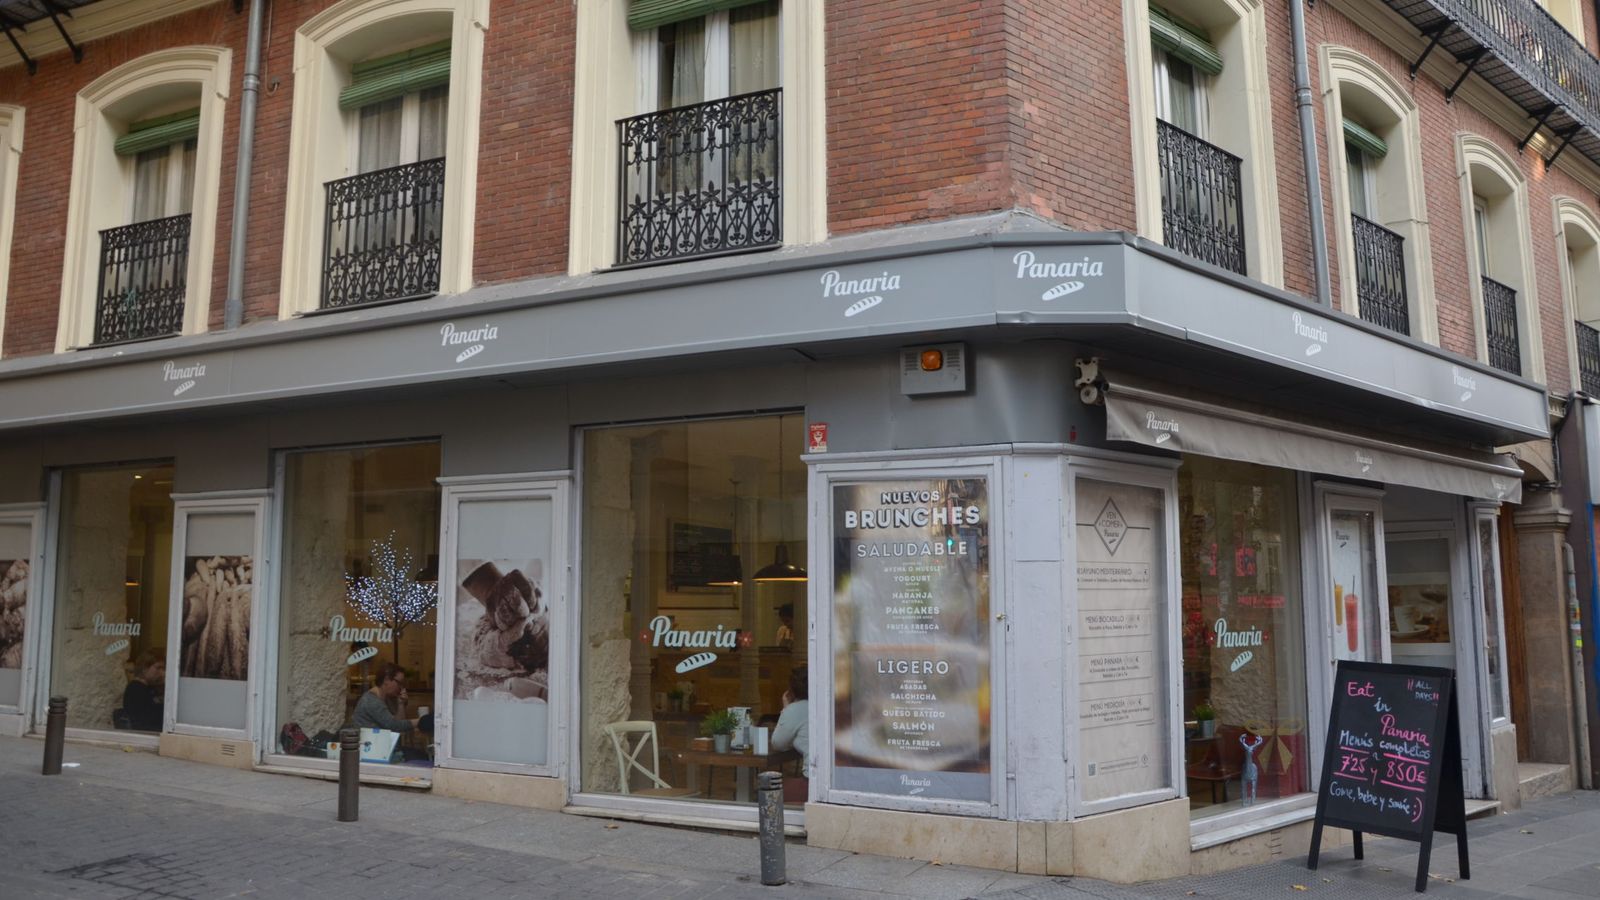 Foto: Local de renta antigua en Madrid. (Foto: Elena Sanz)